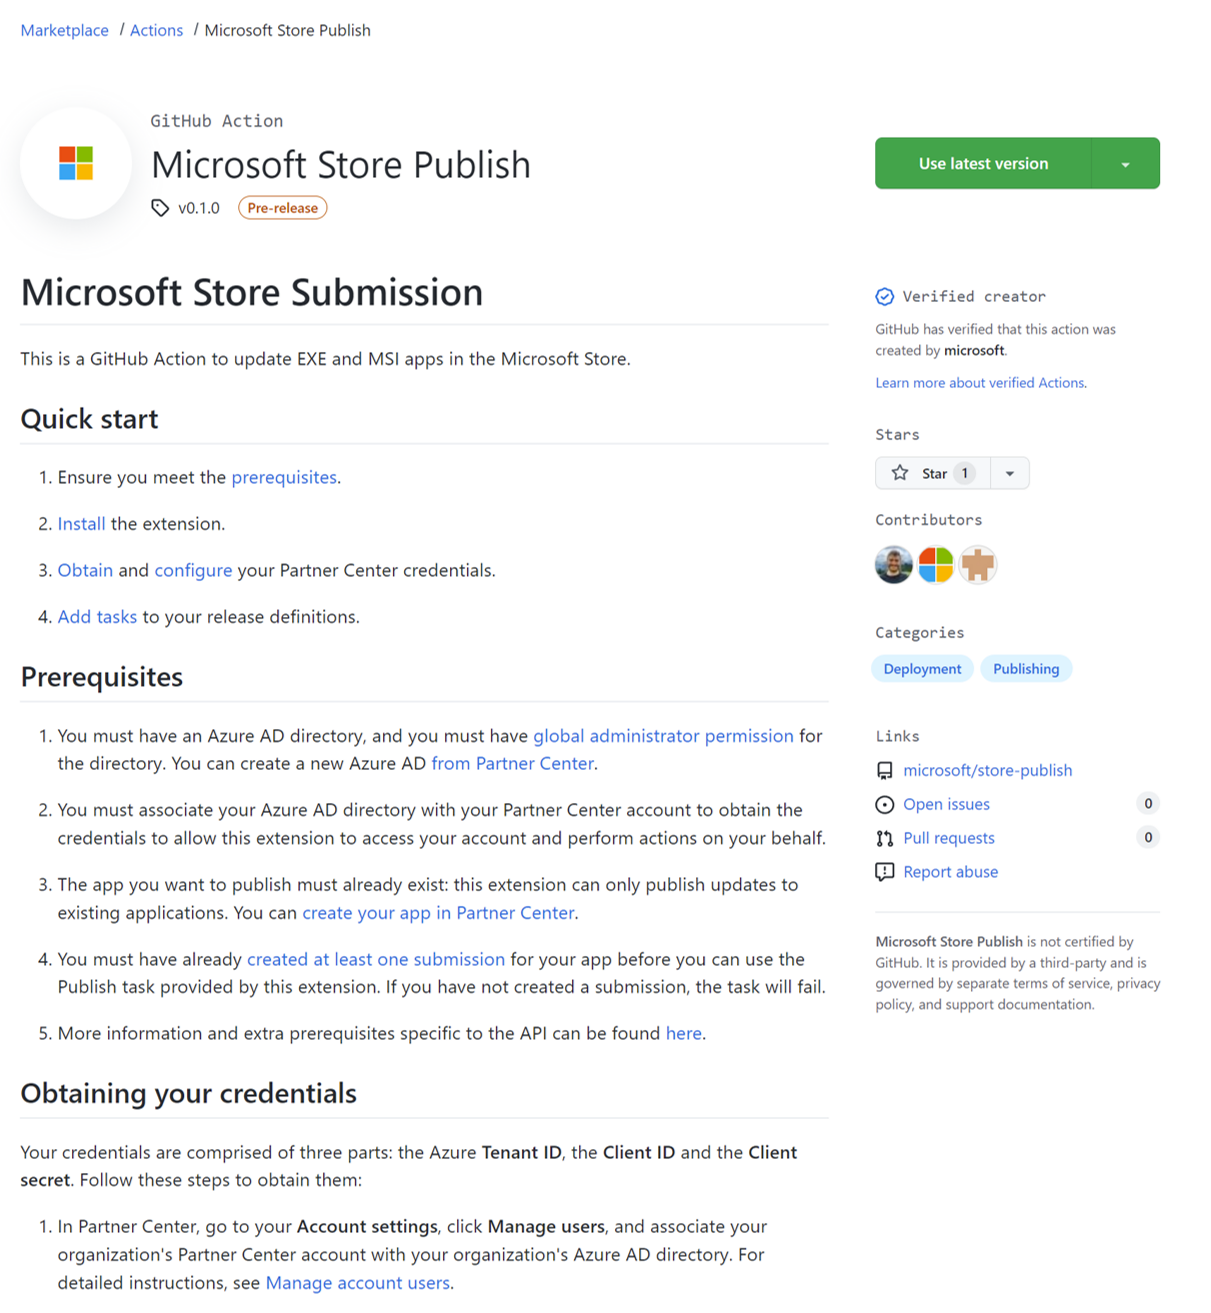 Microsoft Store grows with the developer community - Windows Developer Blog